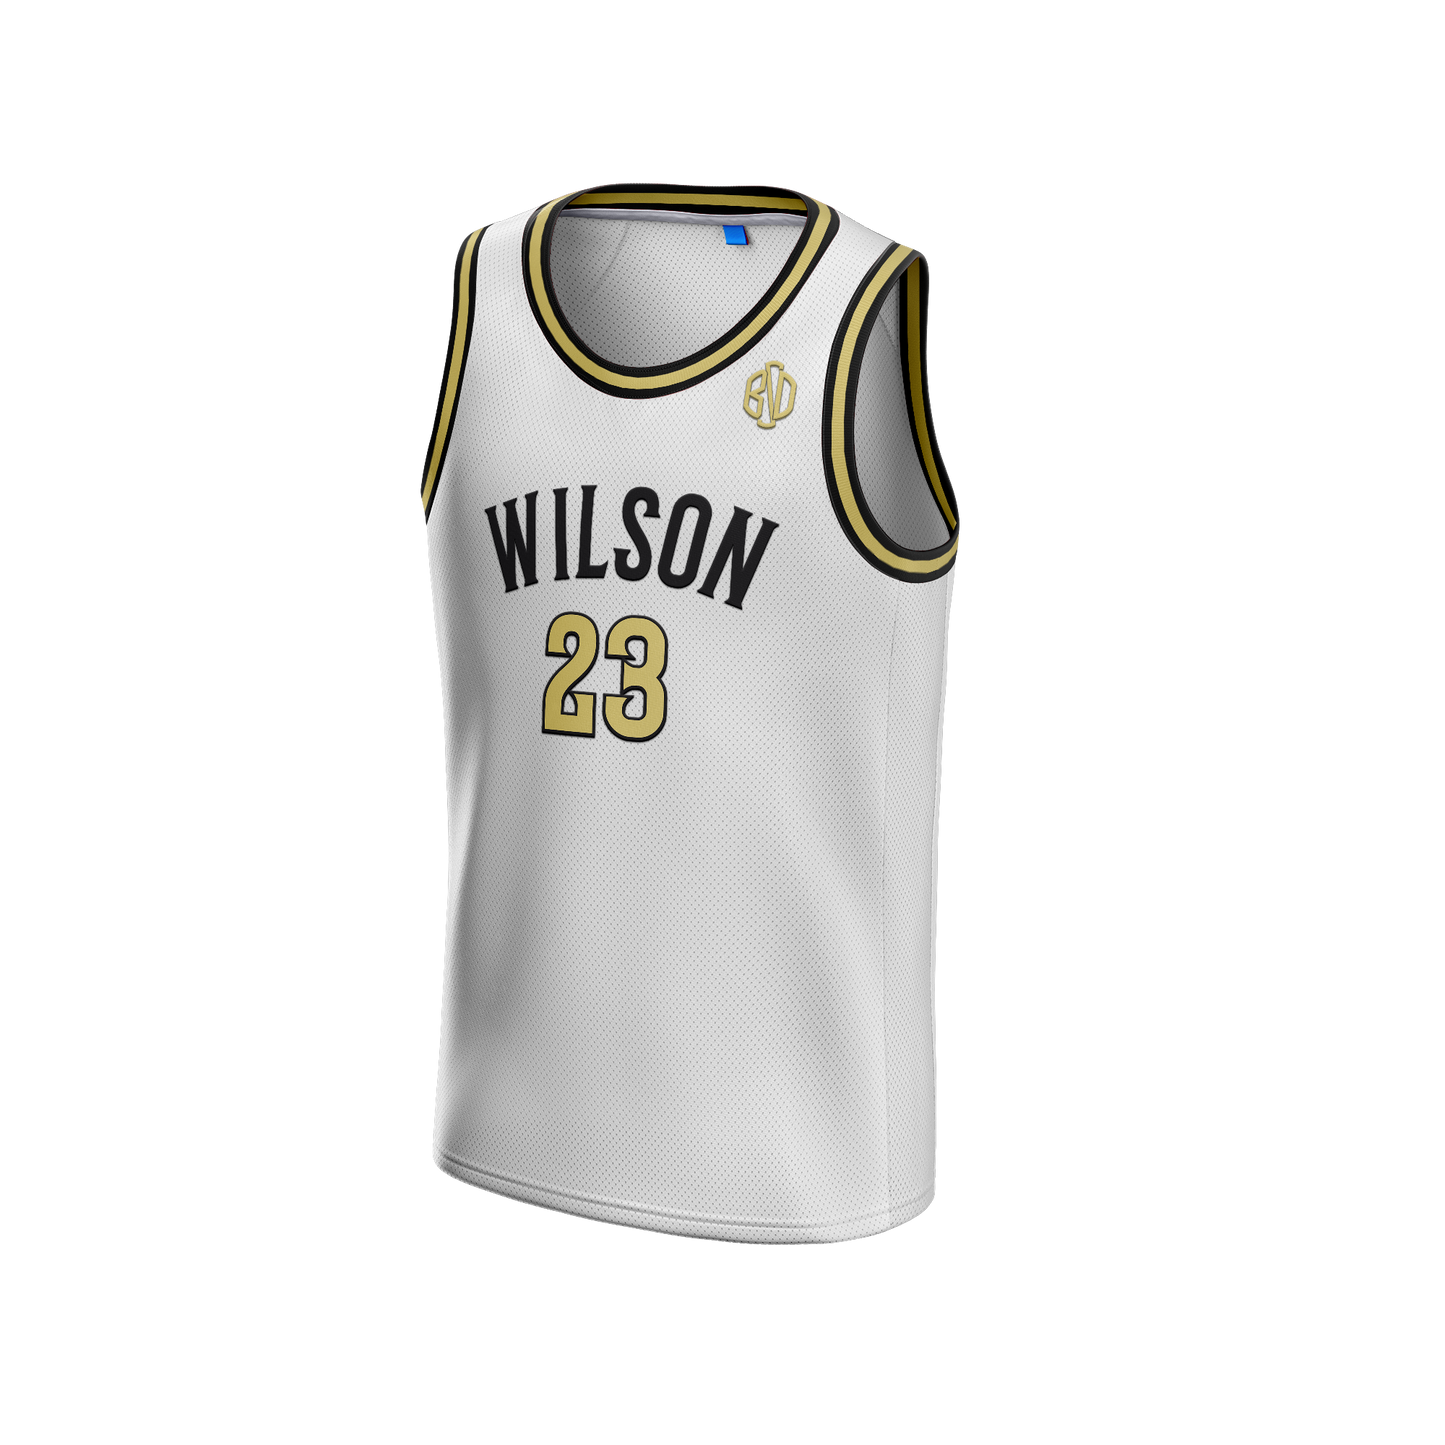 Wilson Freshman Team Store